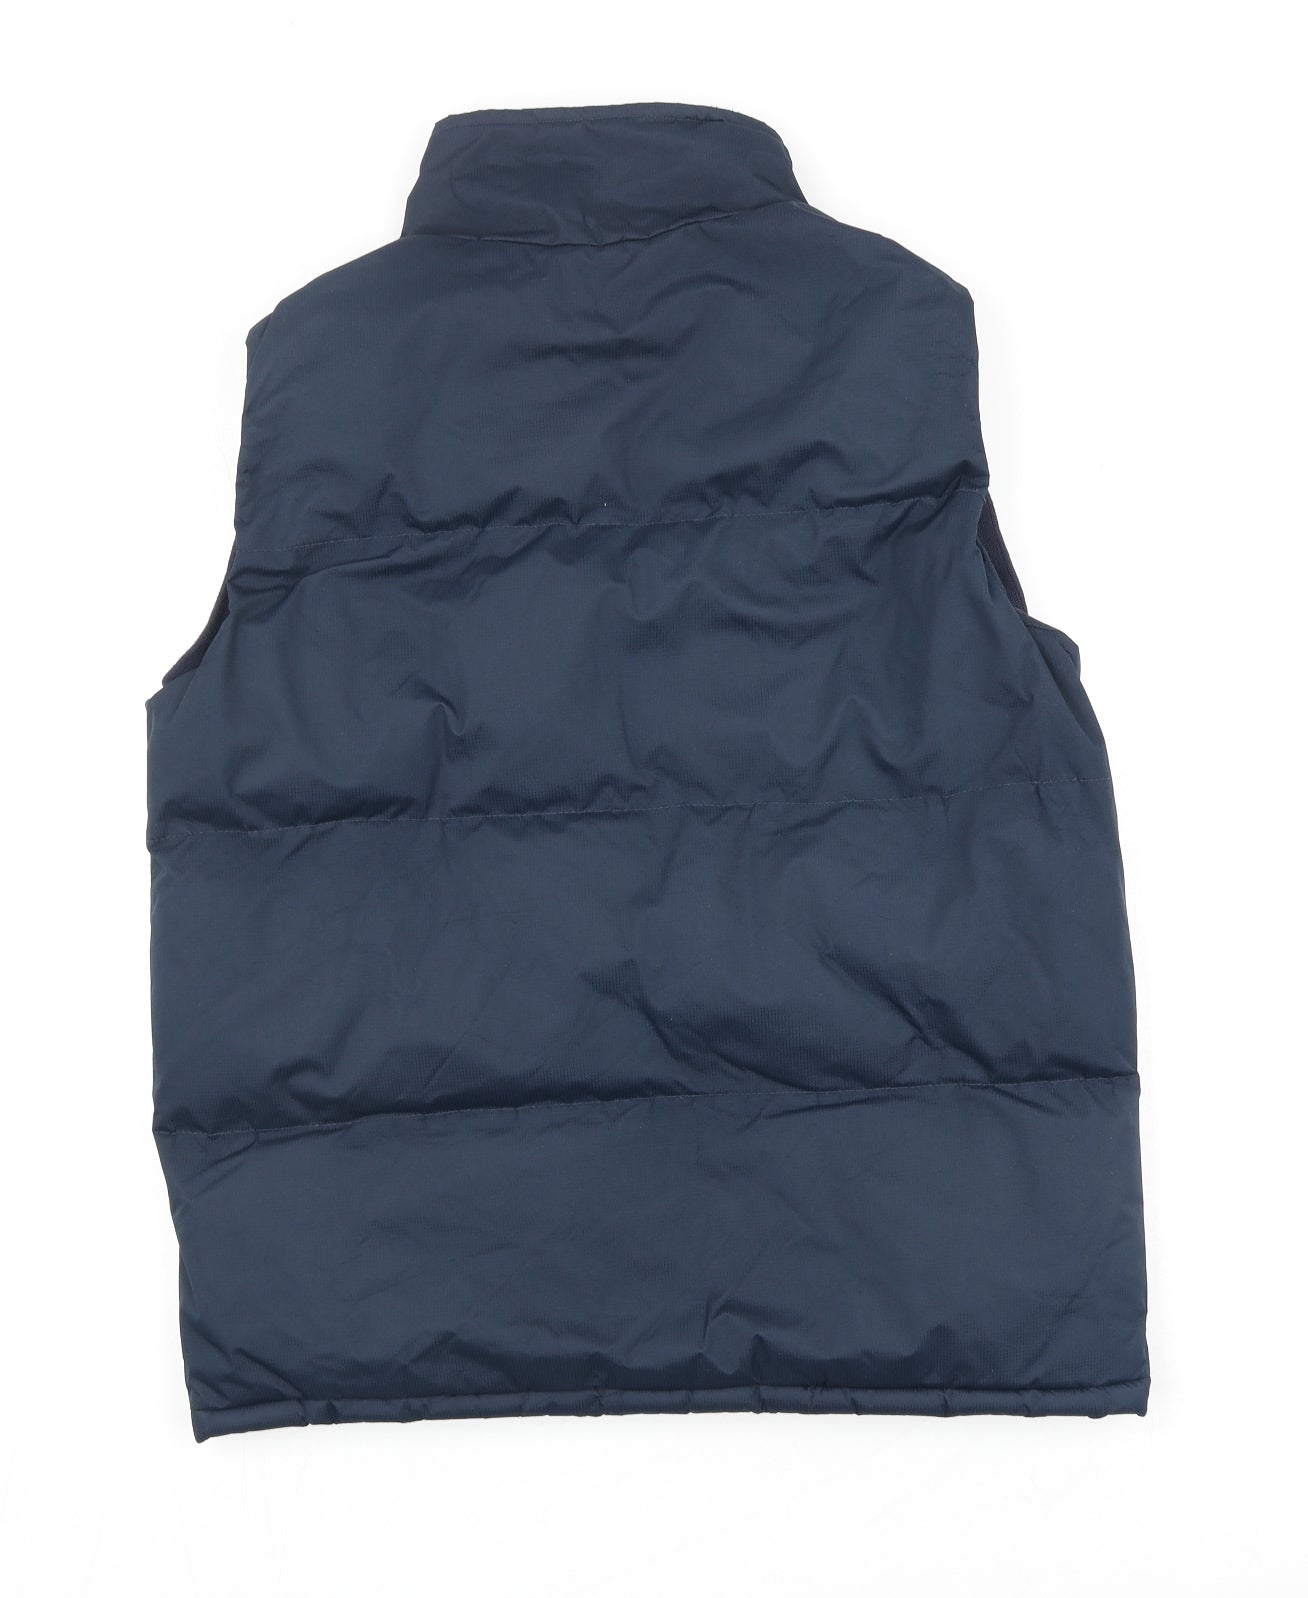 Mountain Warehouse Mens Blue Gilet Jacket Size M Zip